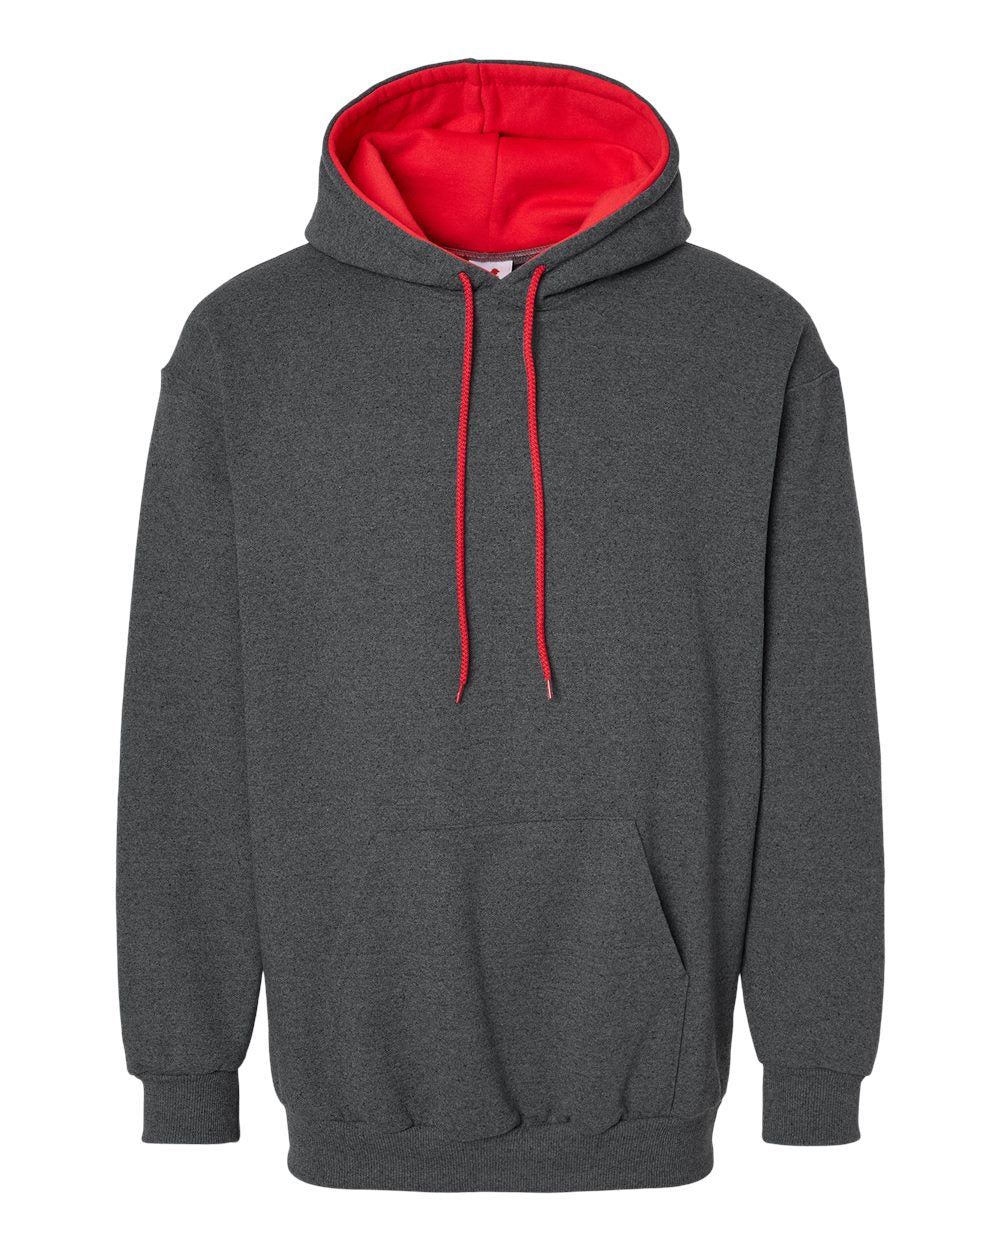 King Fashion Two-Tone Hooded Sweatshirt KF9041 #color_Charcoal/ Red